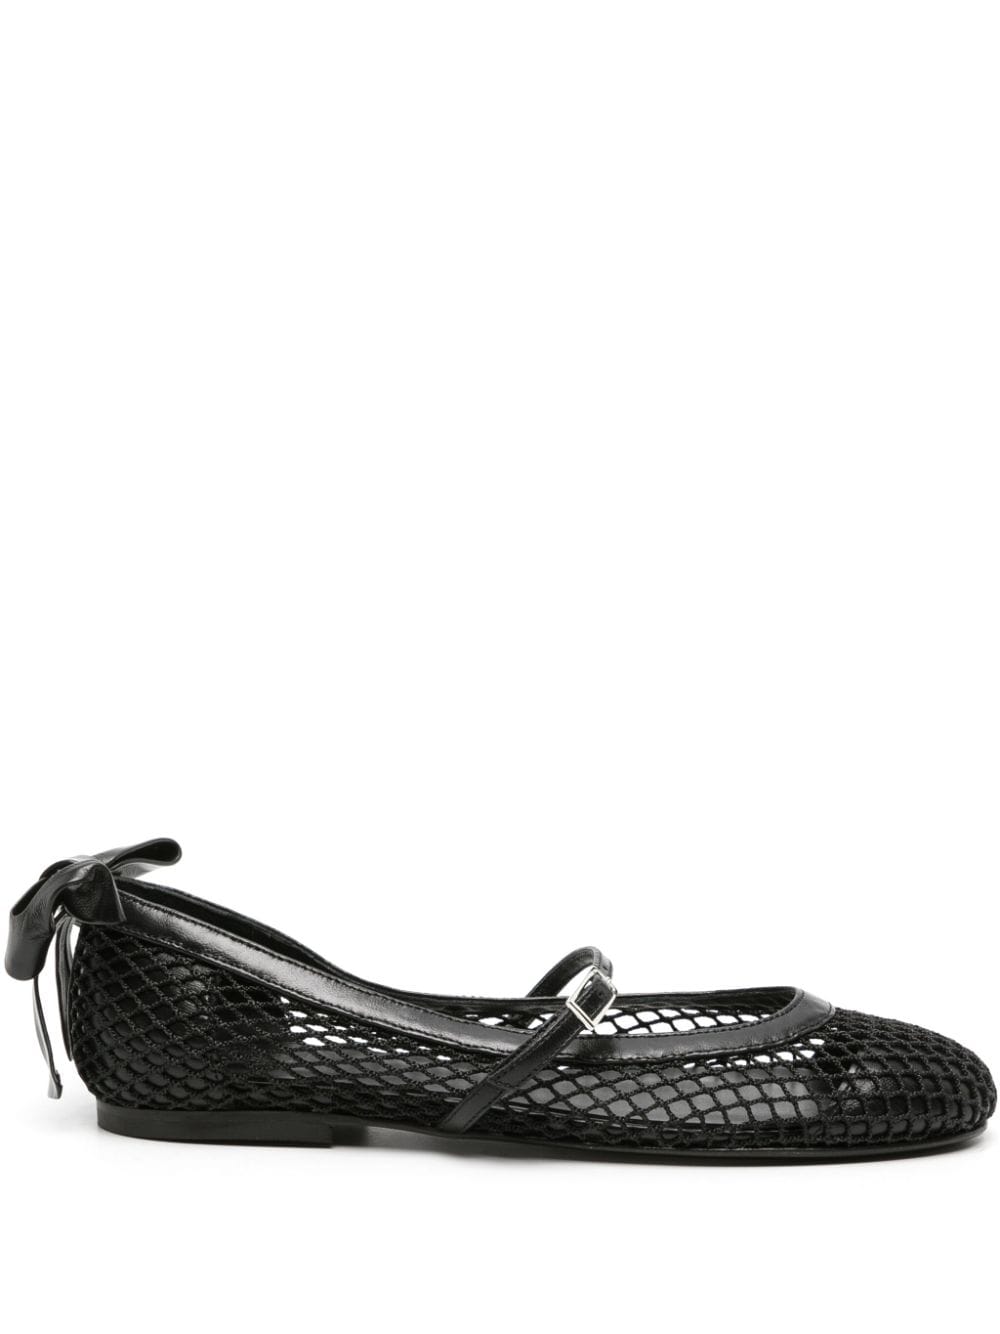 Gia Borghini Grete Mesh Ballerina Shoes In Black